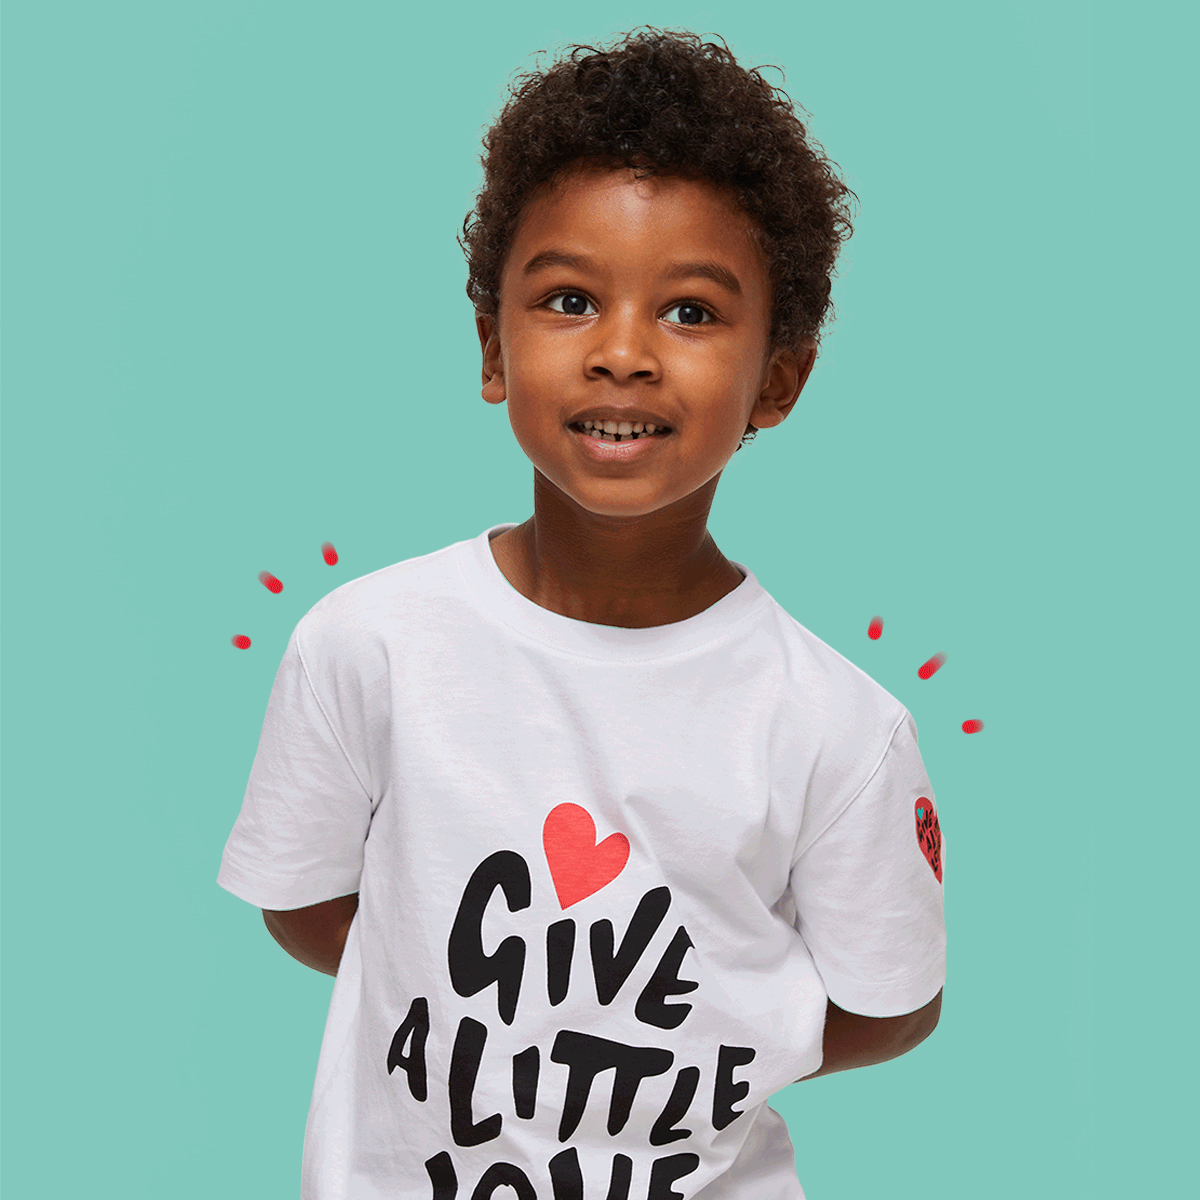  Give a Little Love - Boy wearing Give a Little Love t-shirt